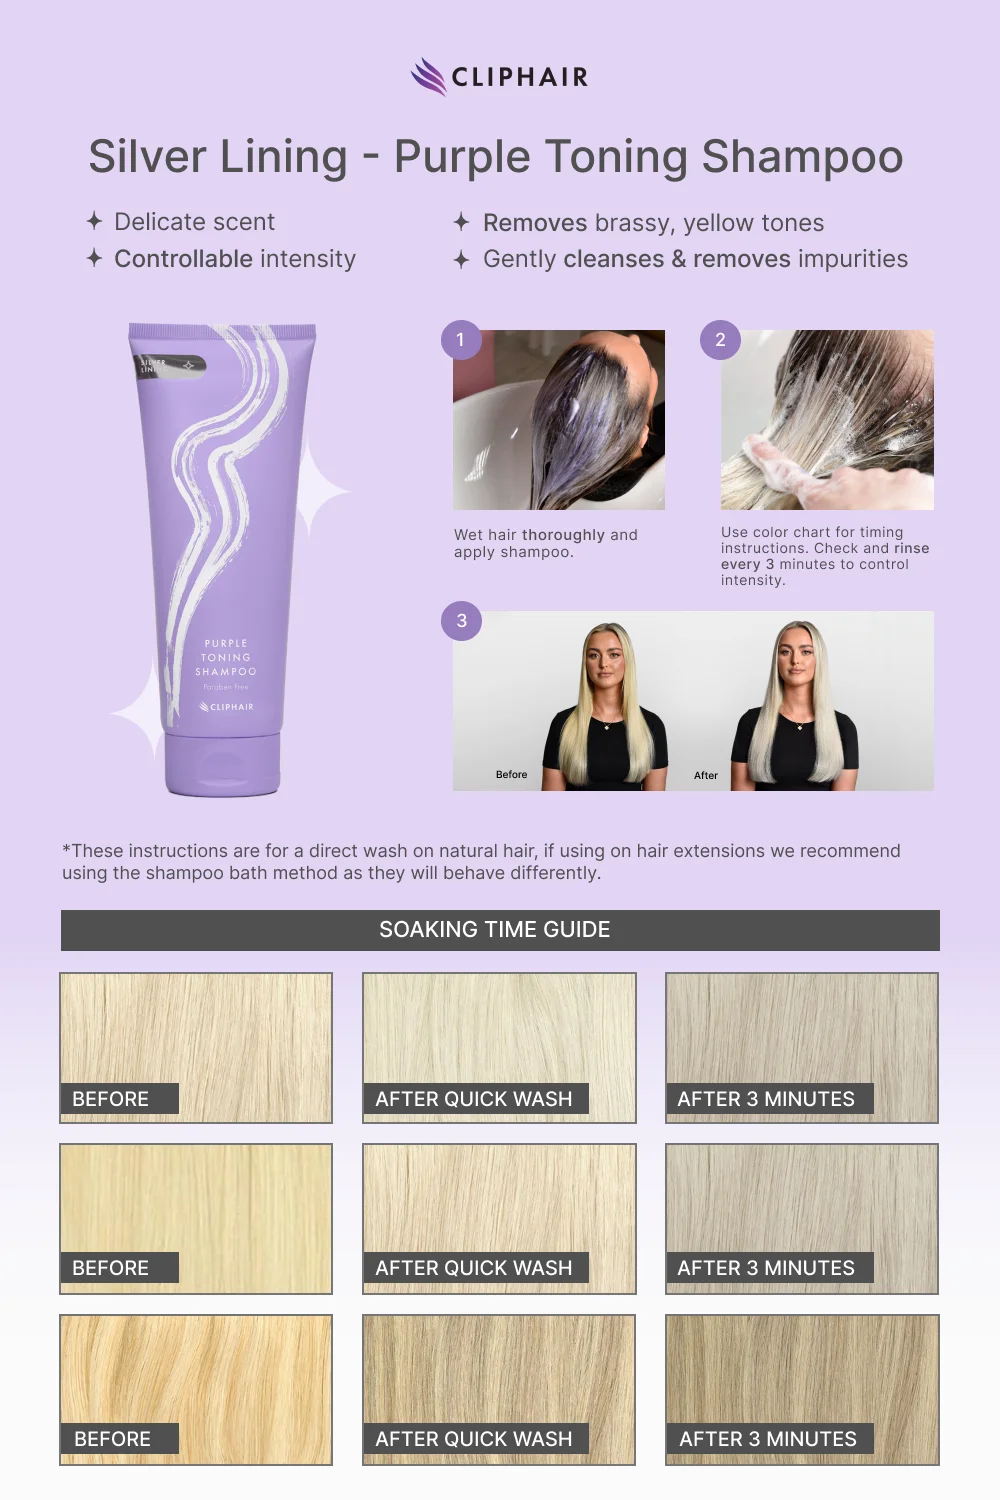 purple shampoo infographic